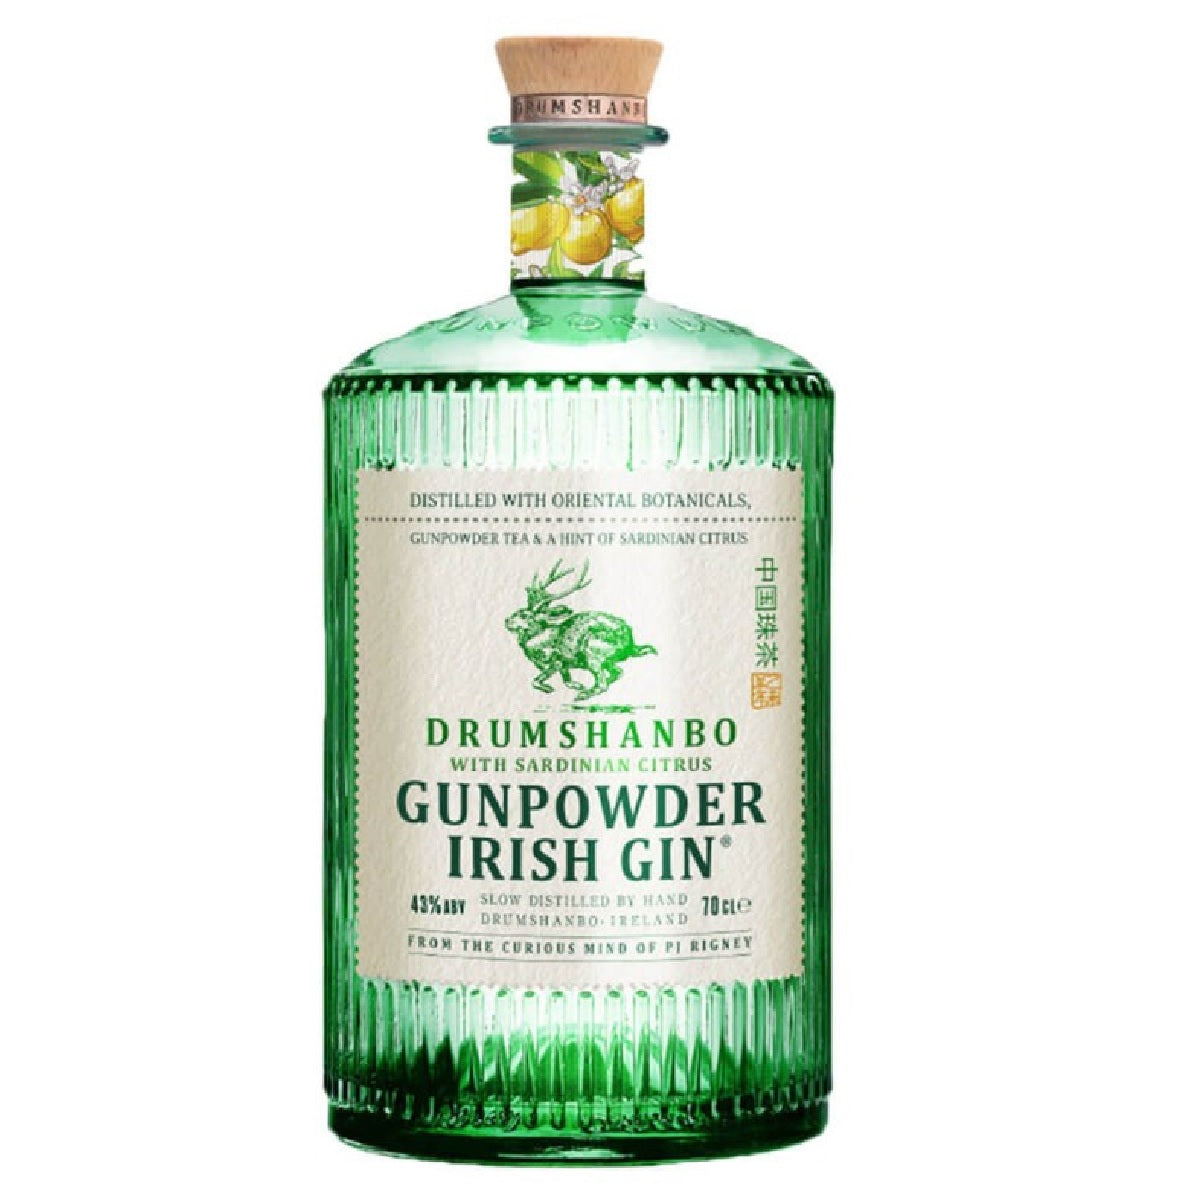 Drumshanbo with Sardinian Citrus Gunpowder Irish Gin 70cl